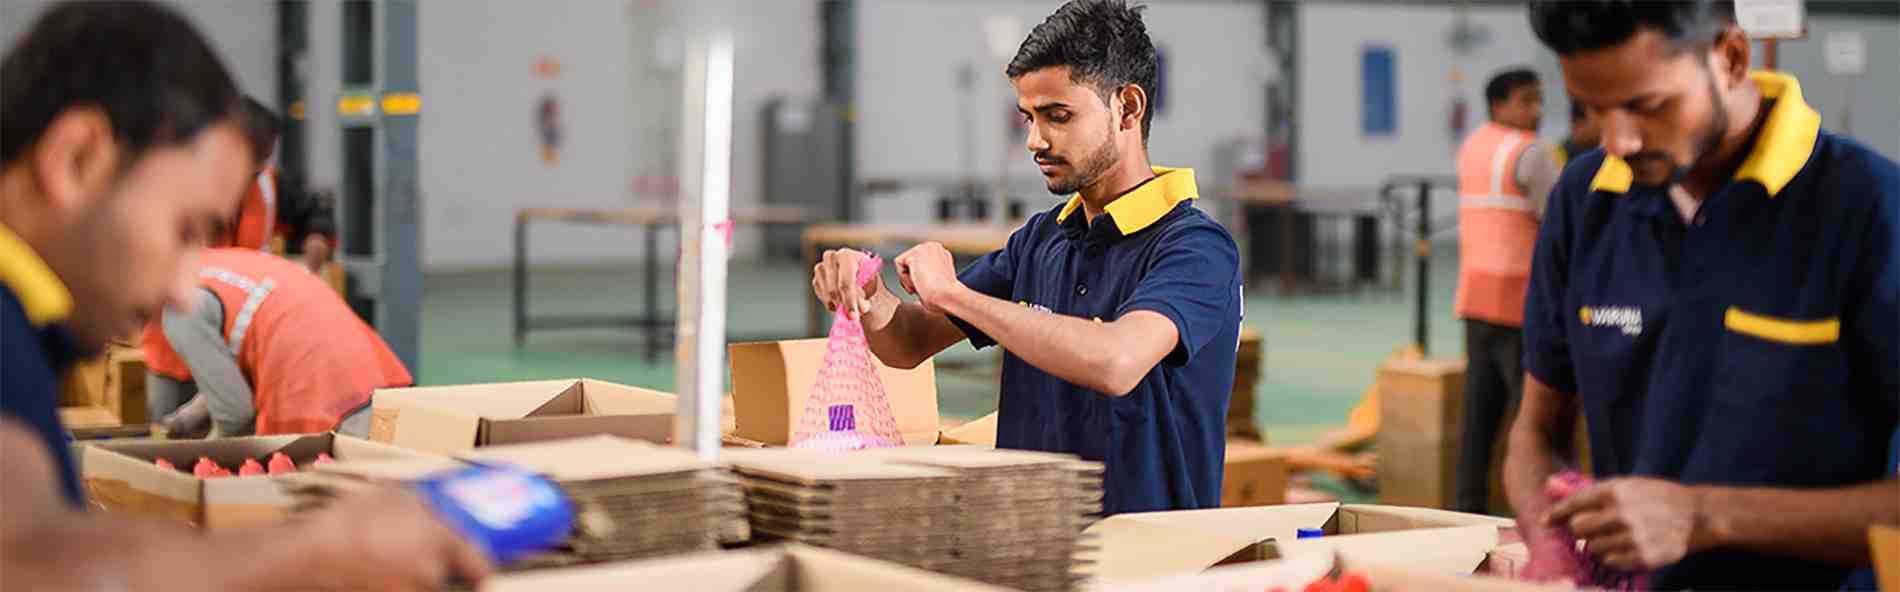 warehousing companies in india